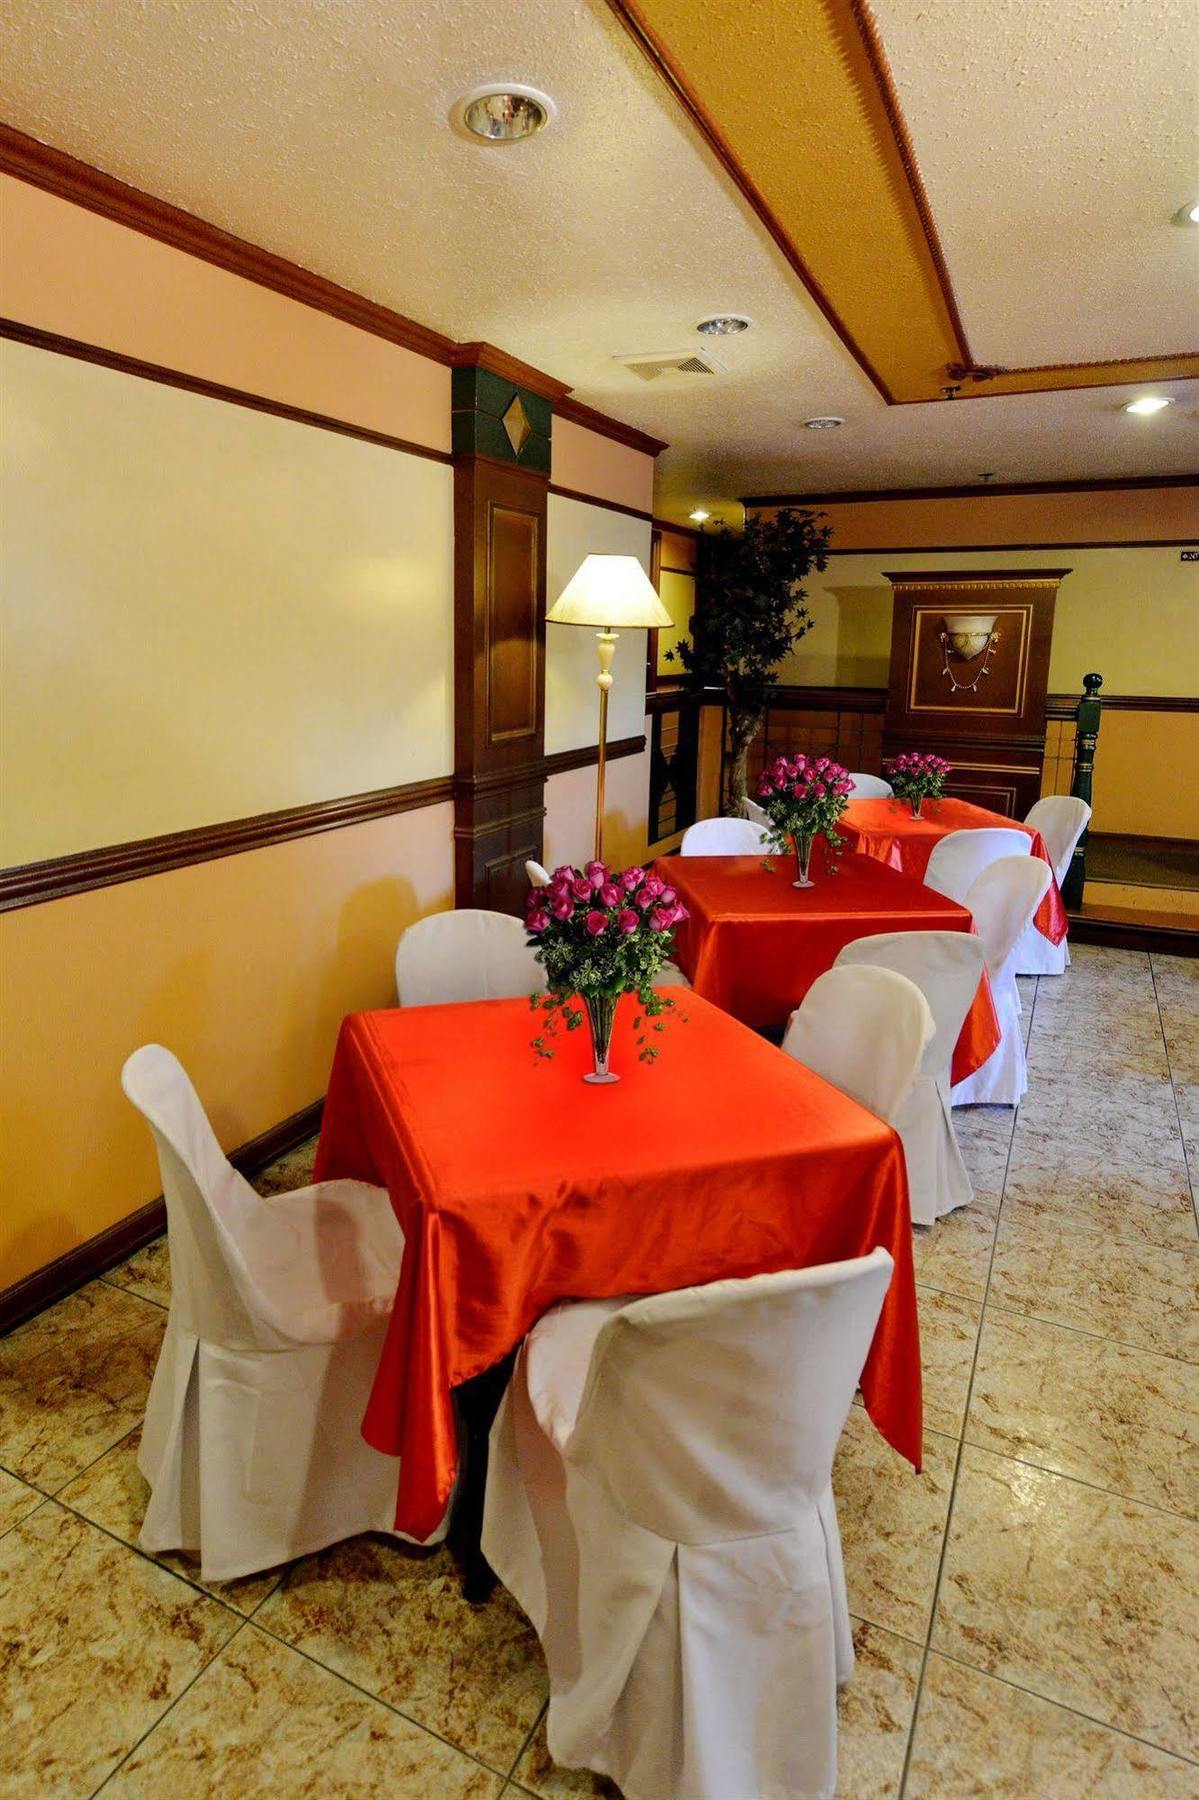 Paladin Hotel Baguio City Εξωτερικό φωτογραφία